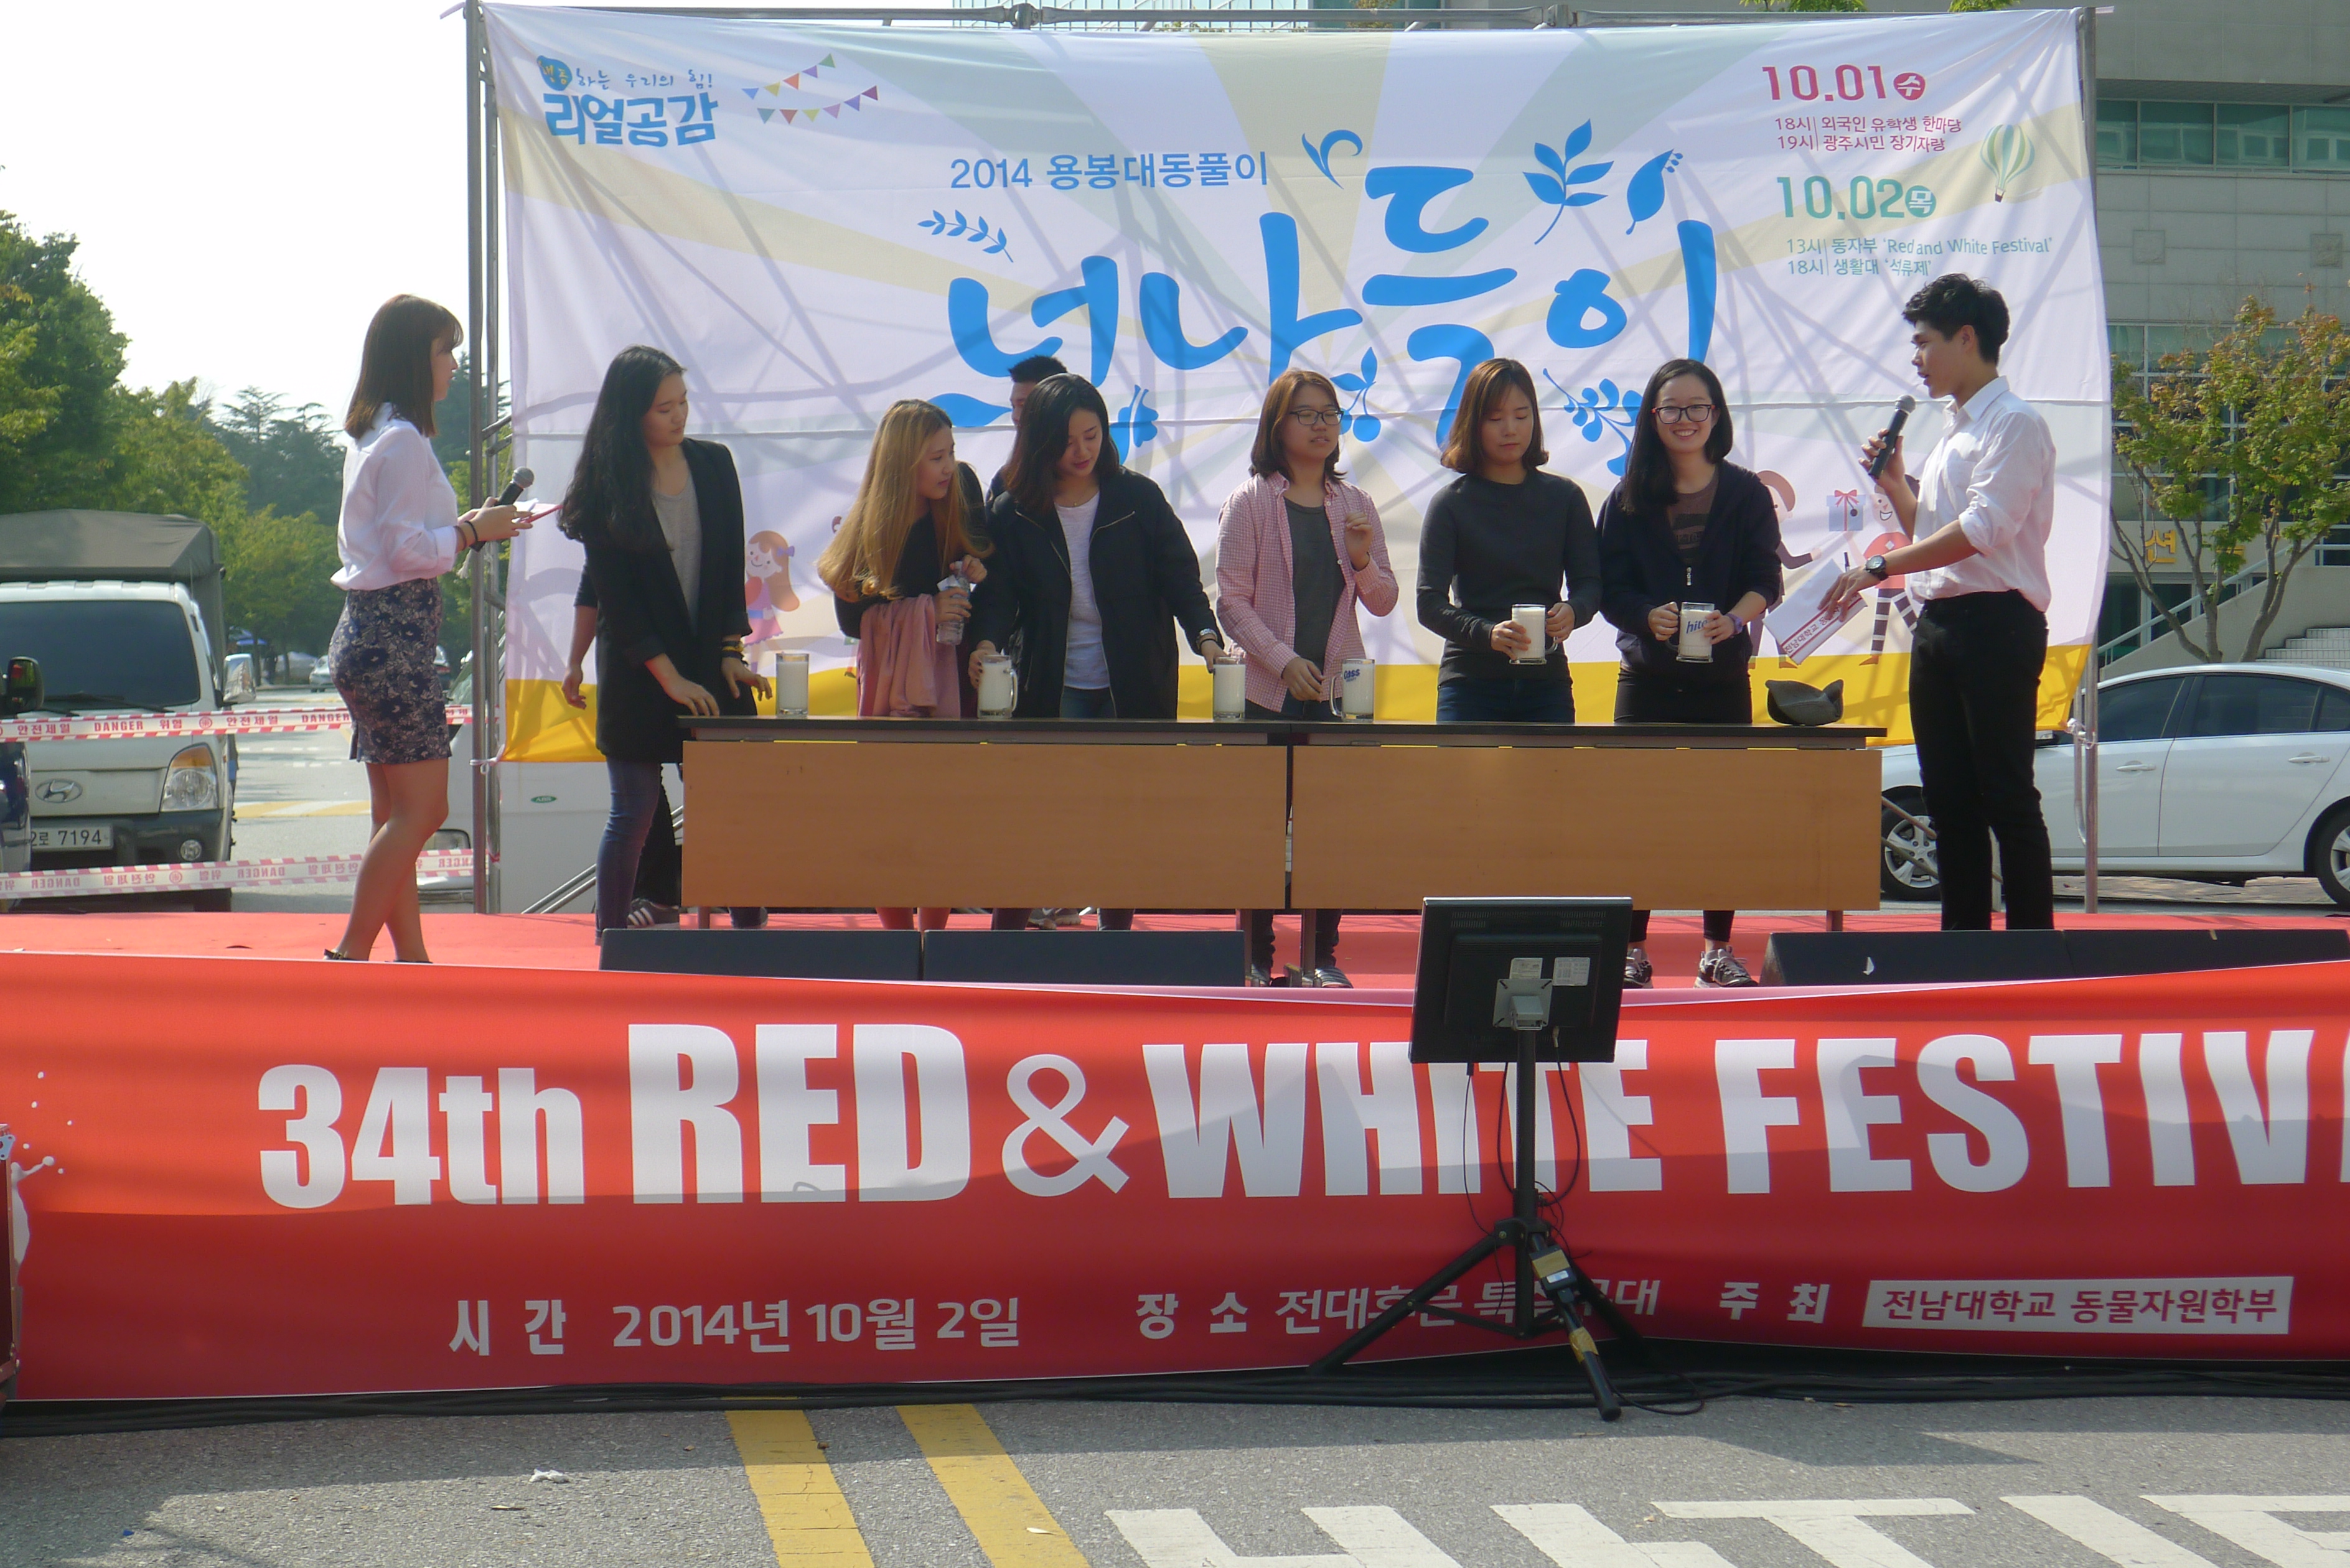 2014 Red & White Festival 대표이미지